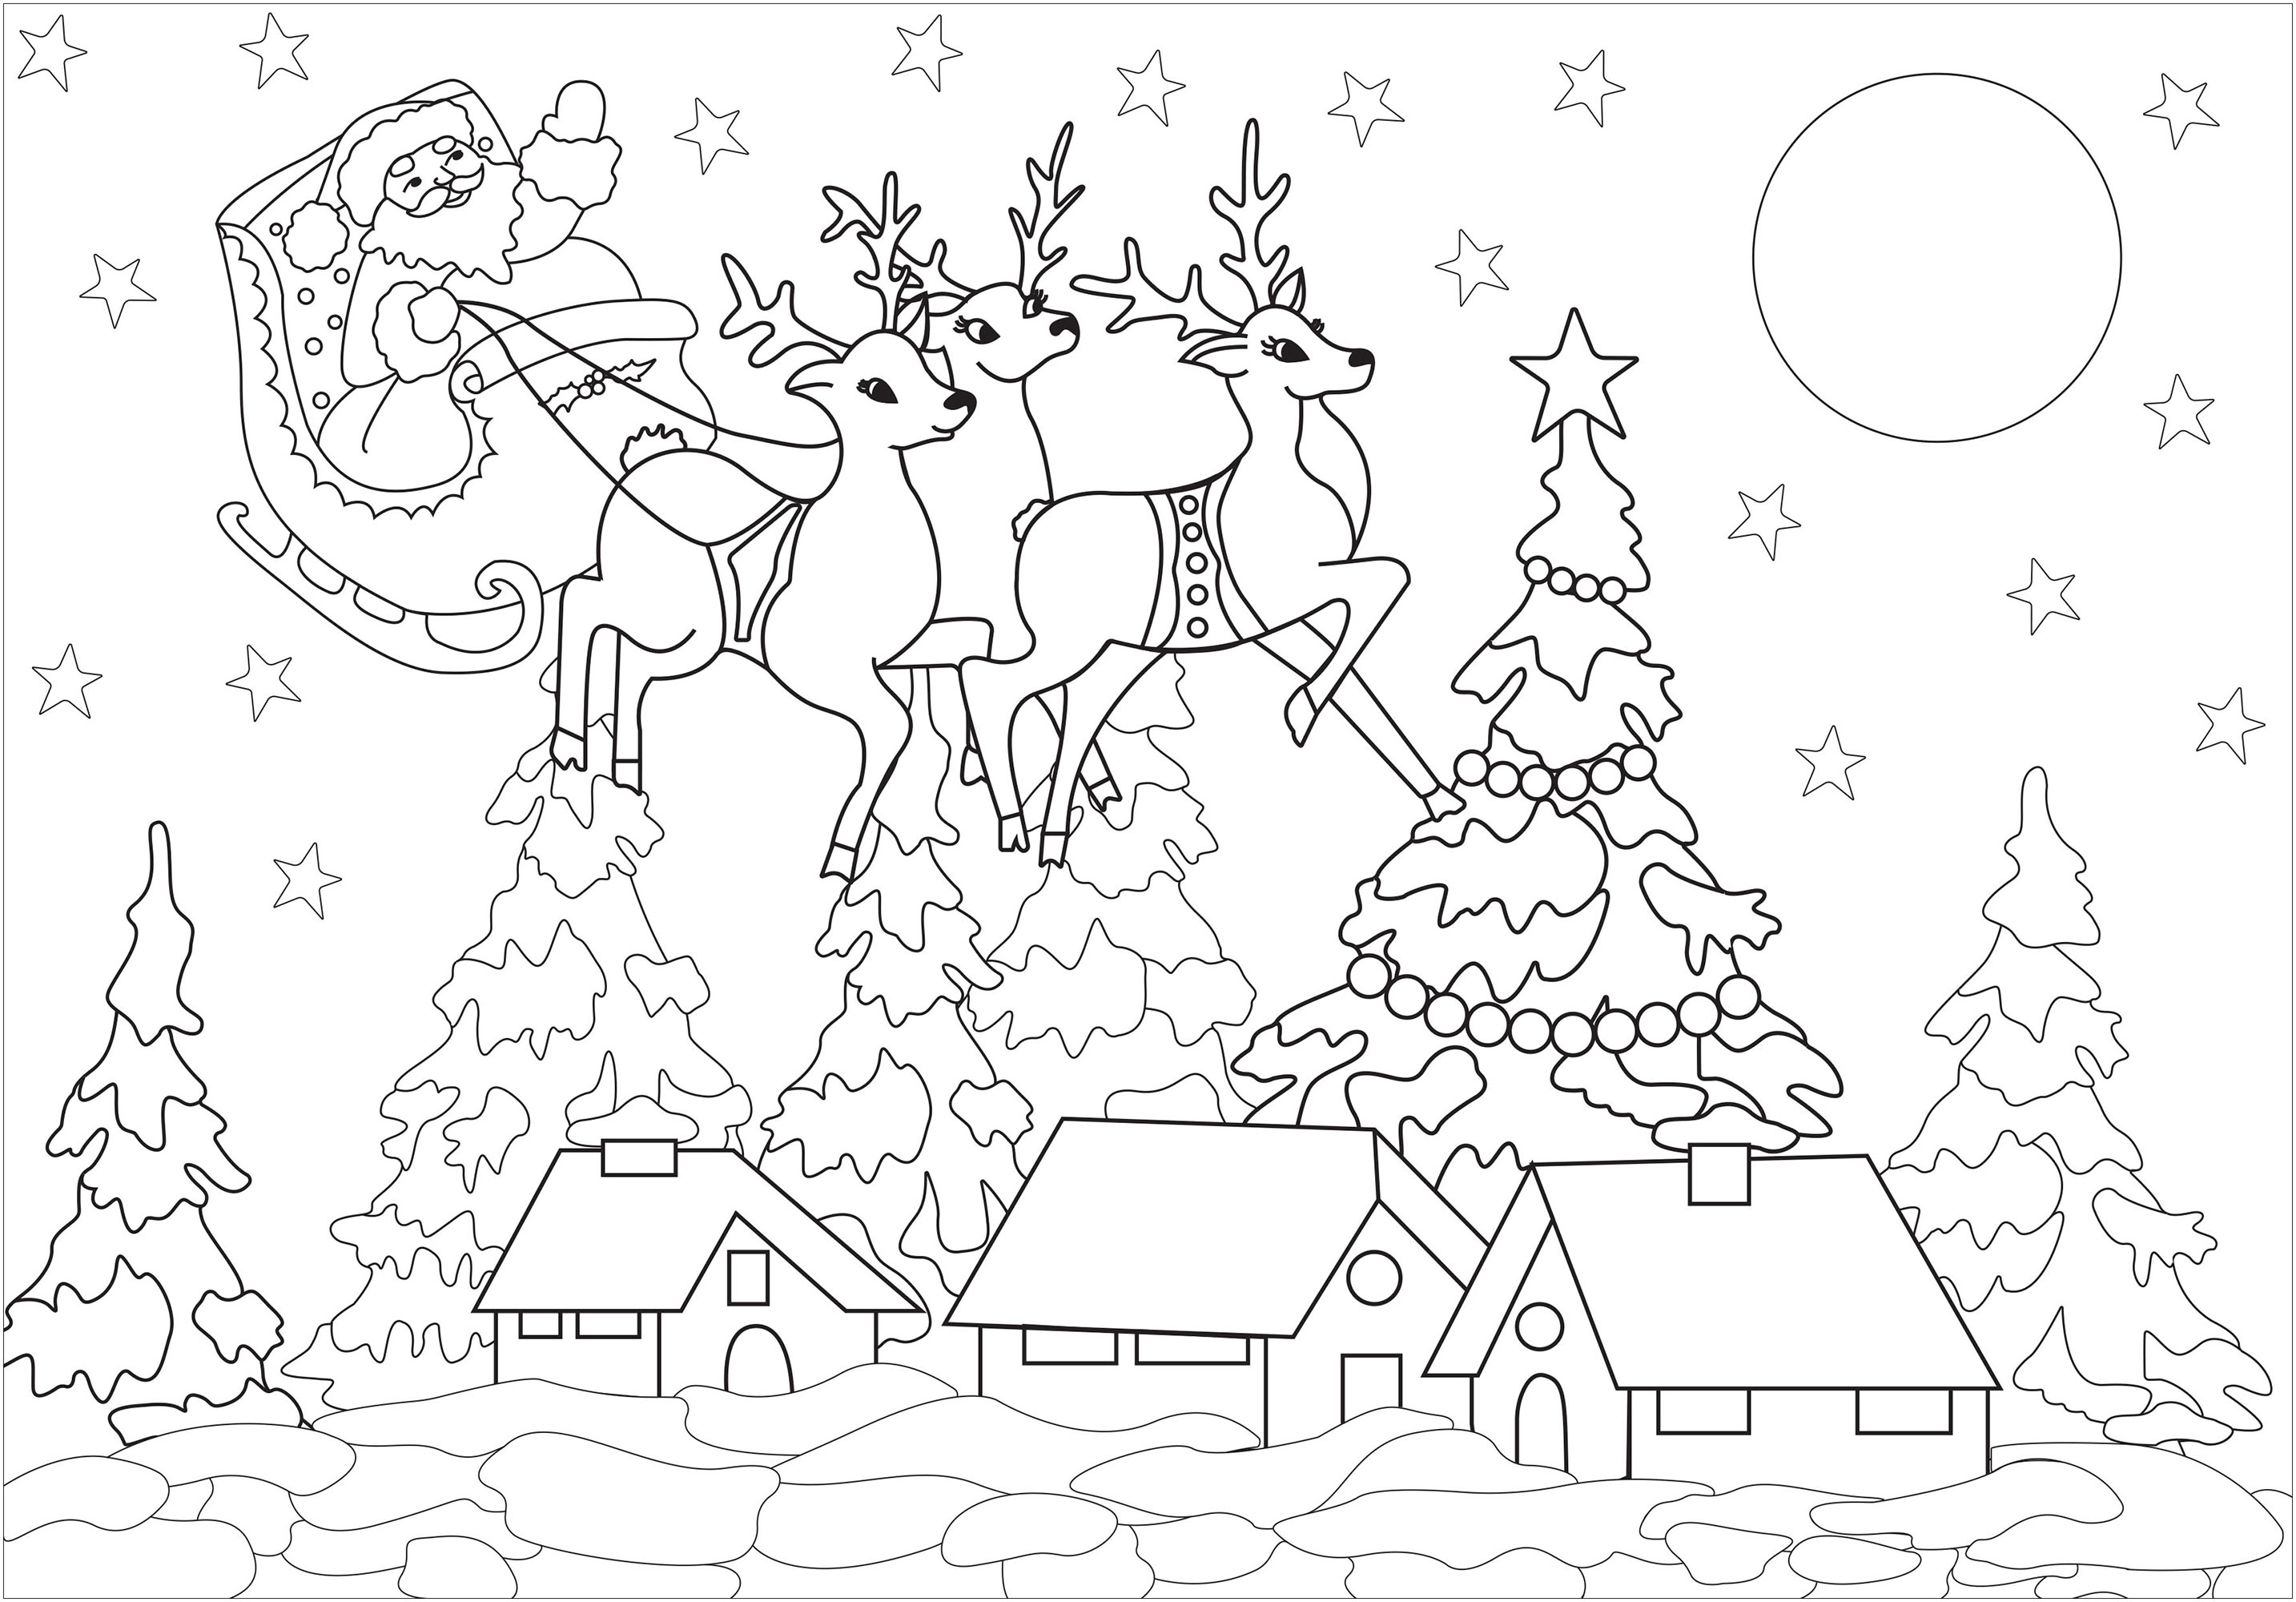 O Pai Natal chega a esta bonita aldeia de neve, Artista : Arwen